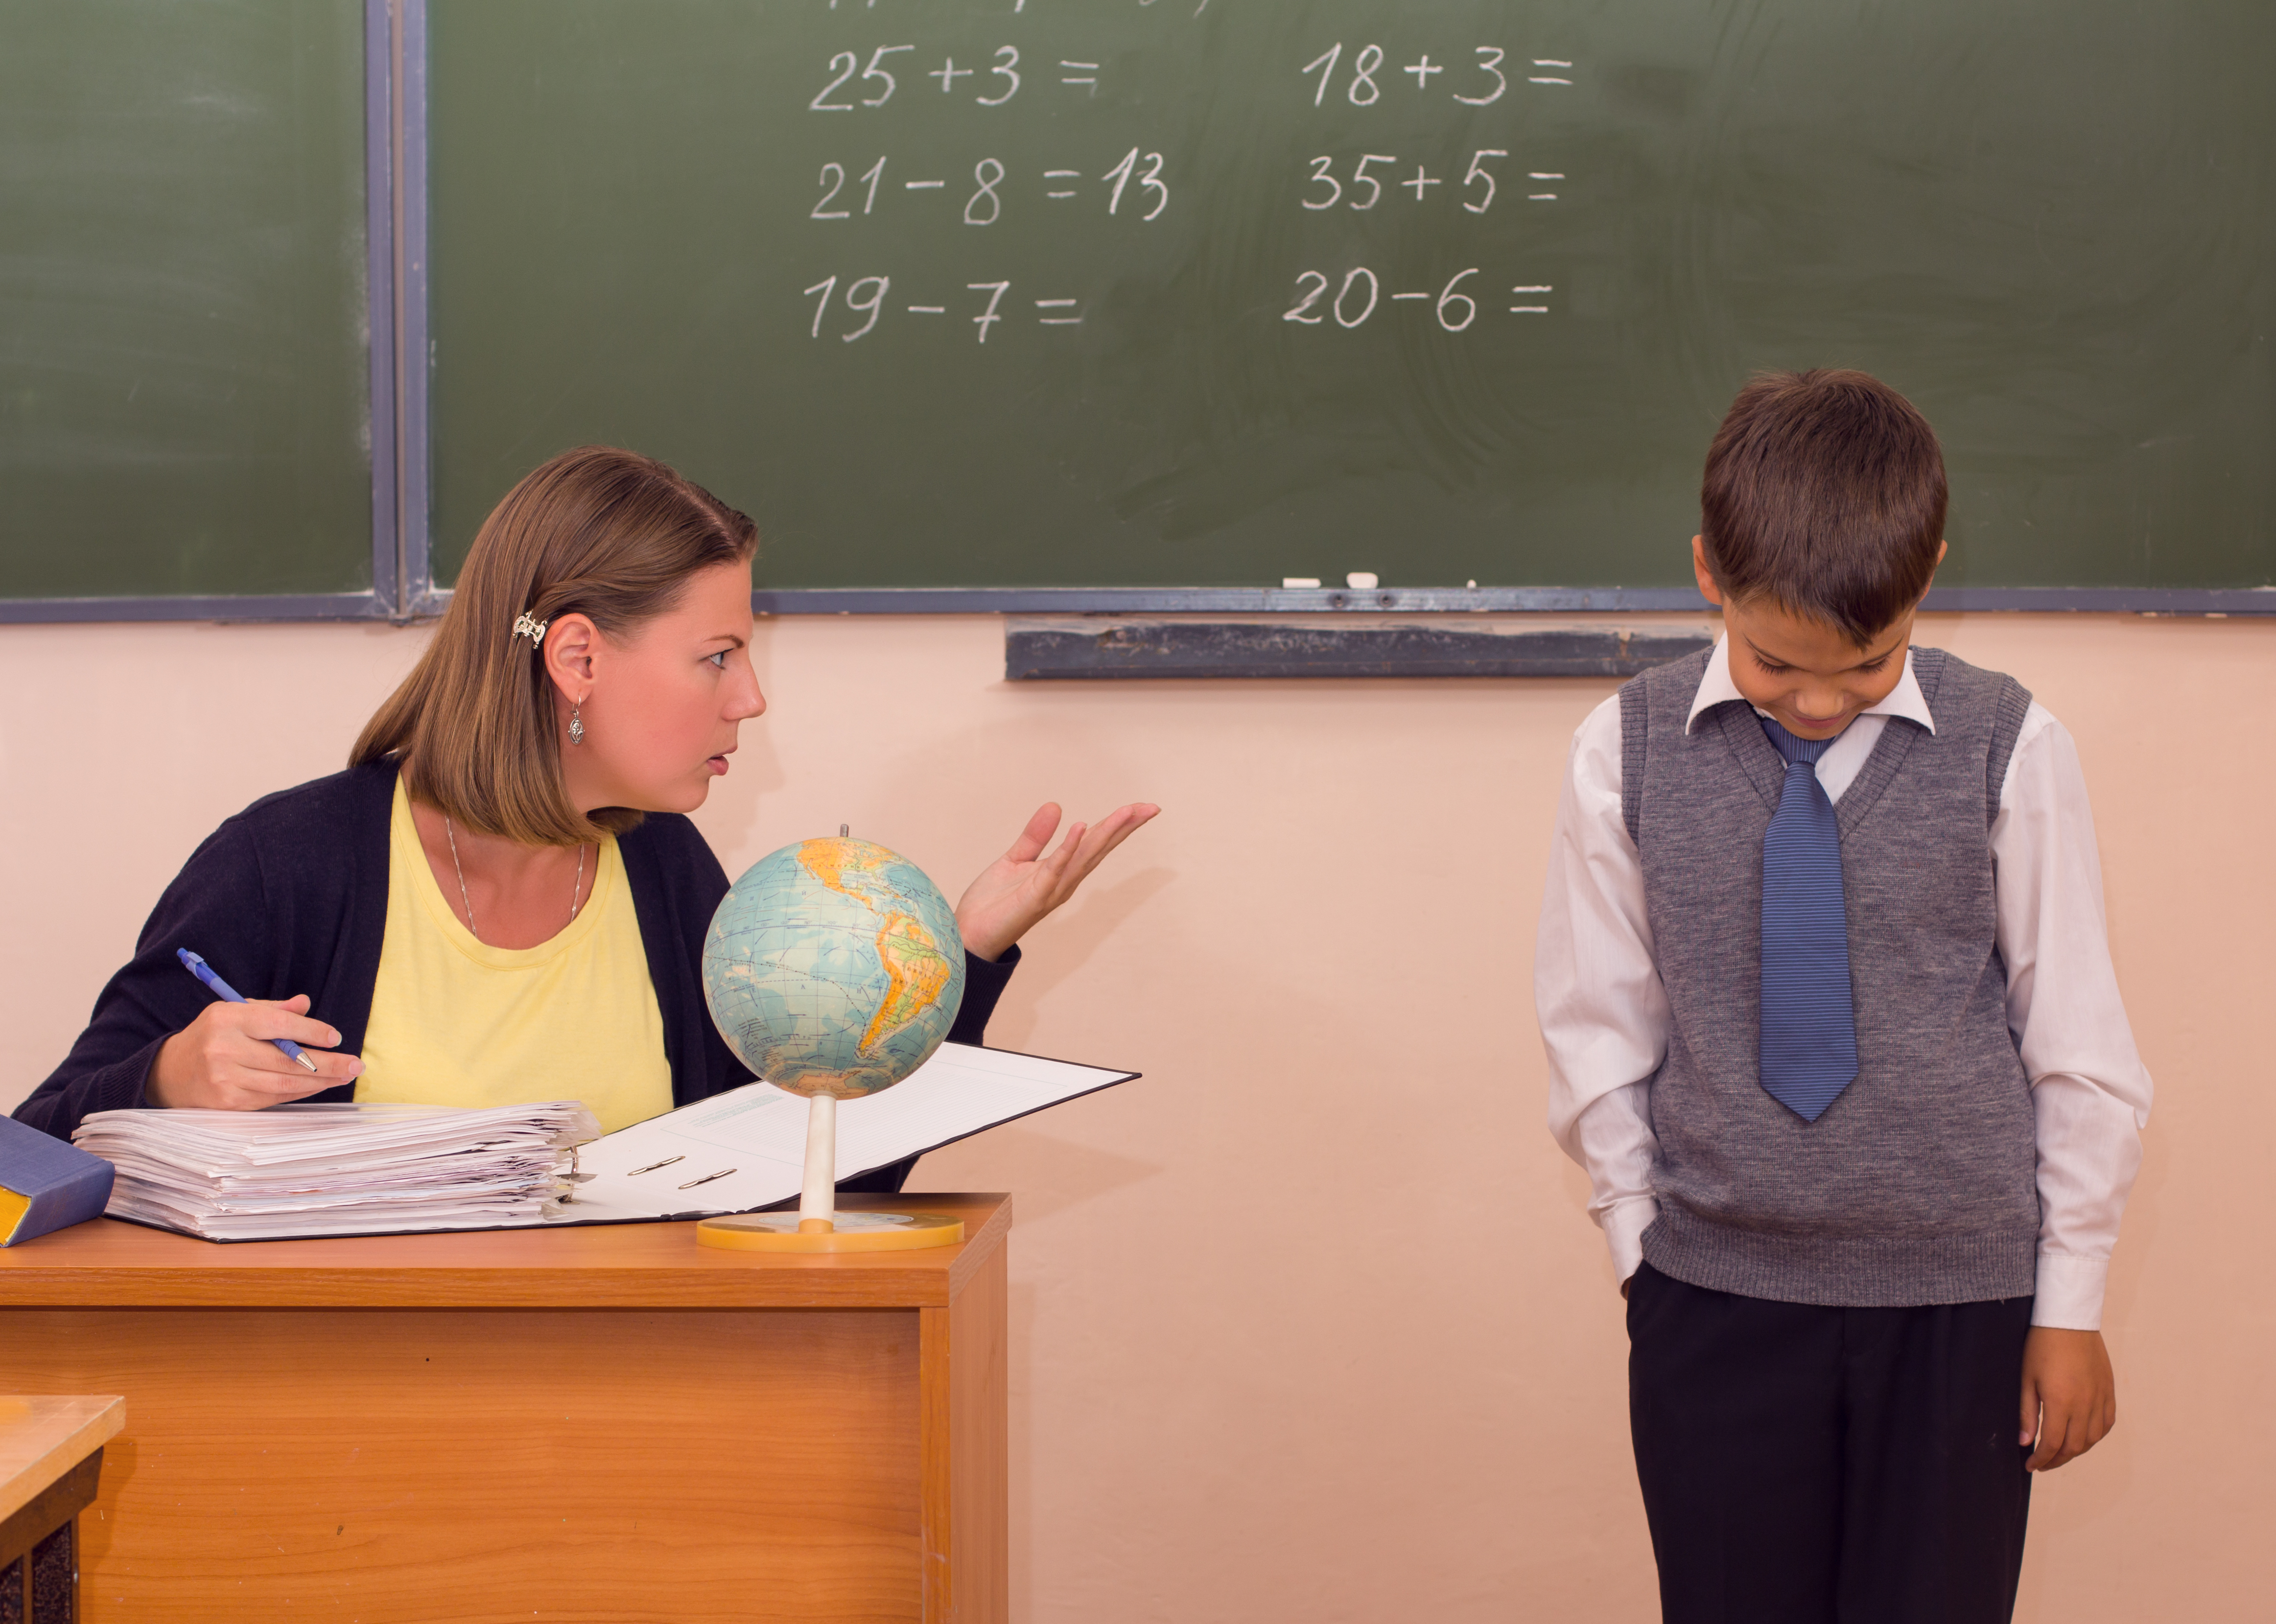 A teacher scolding a boy in front of the class | Source: Shutterstock